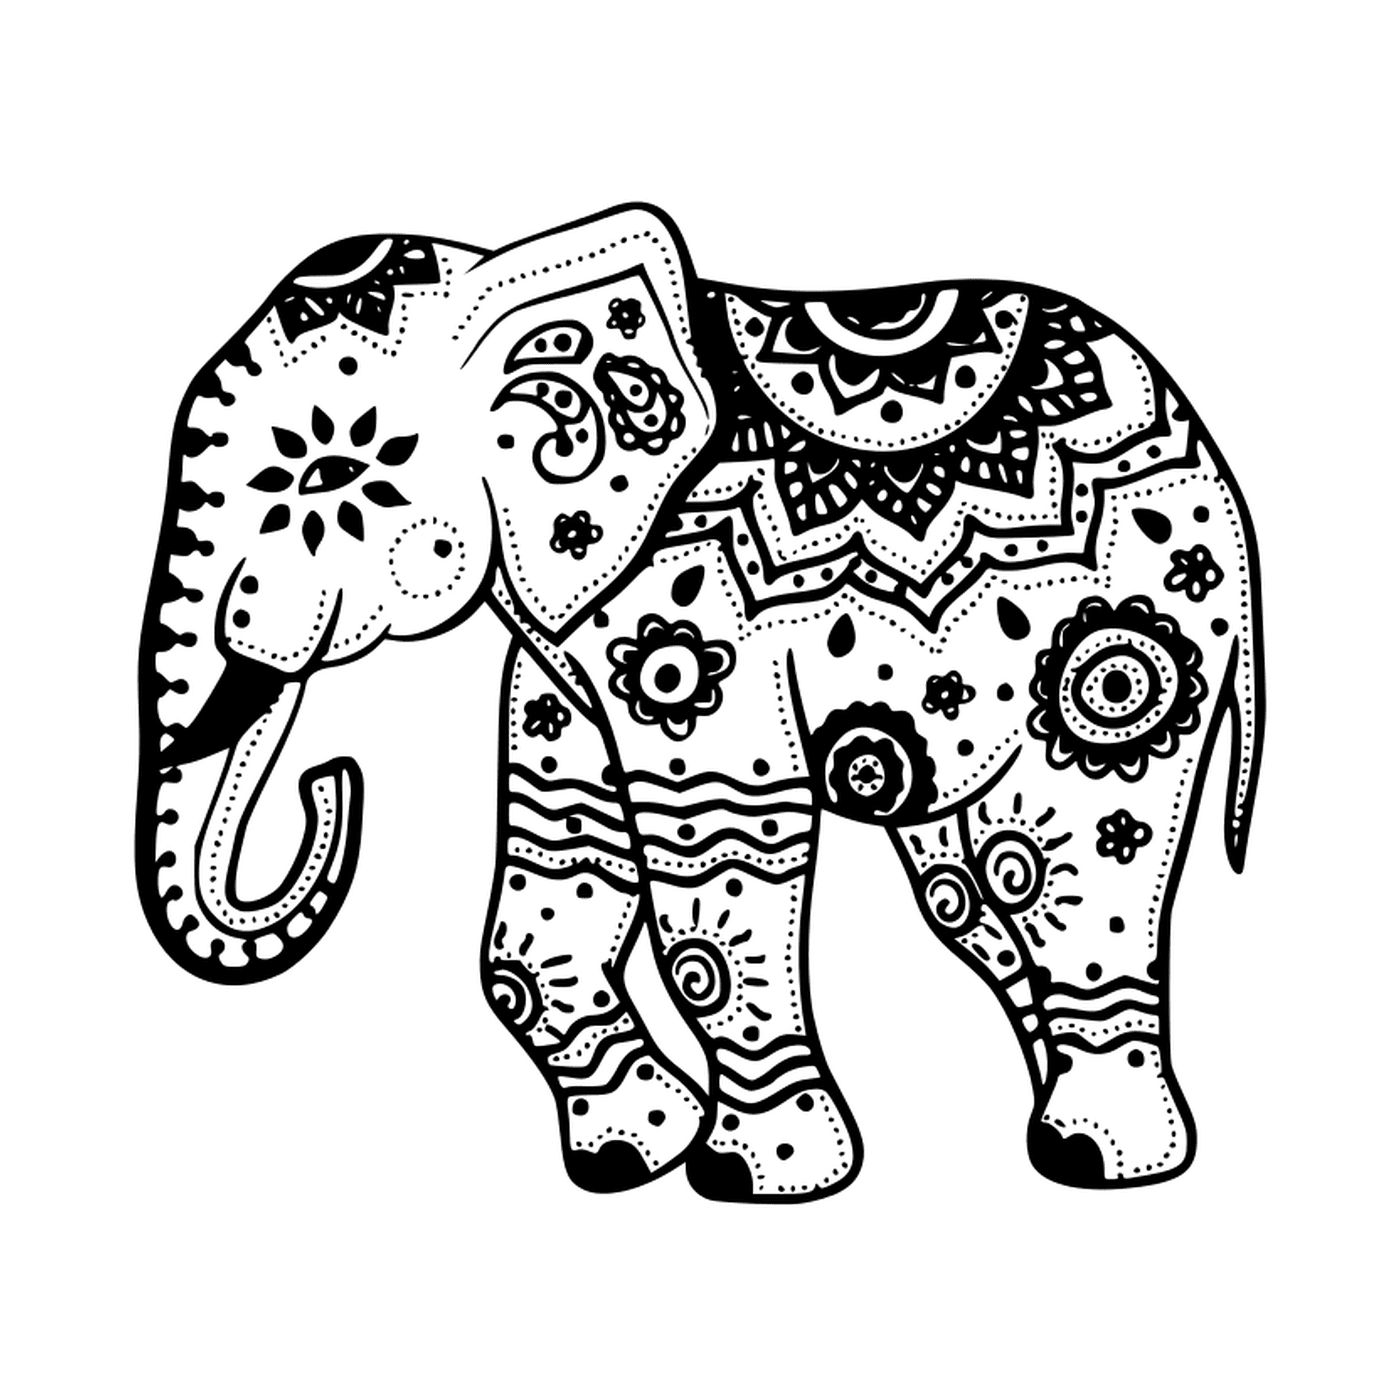  Слон с мотивами 